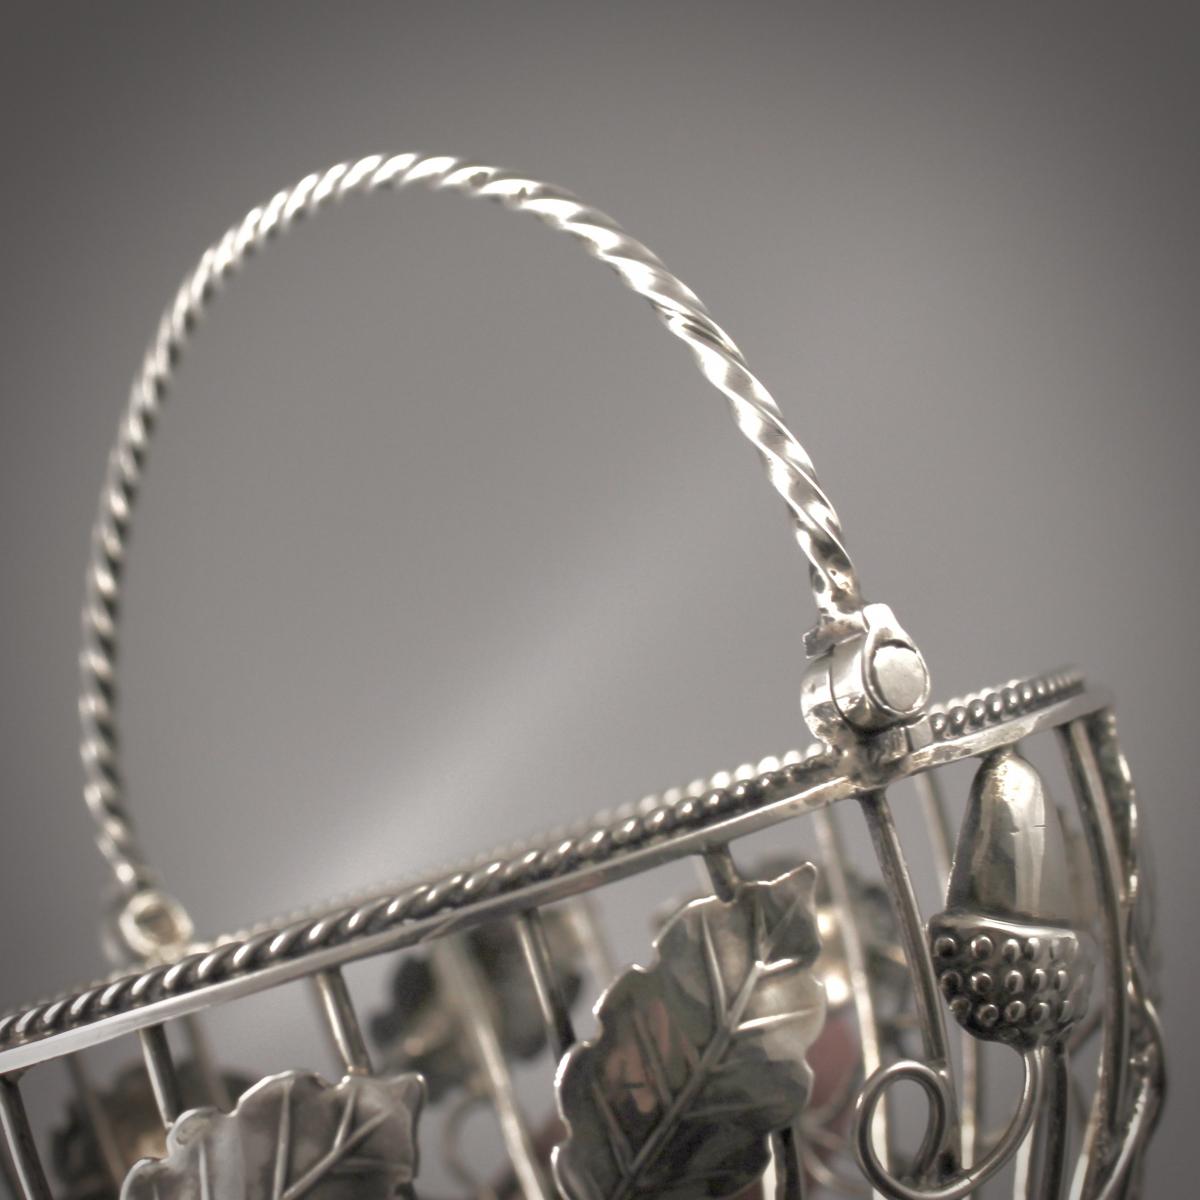 George III Silver Cream Basket by David Bell. Circa 1770